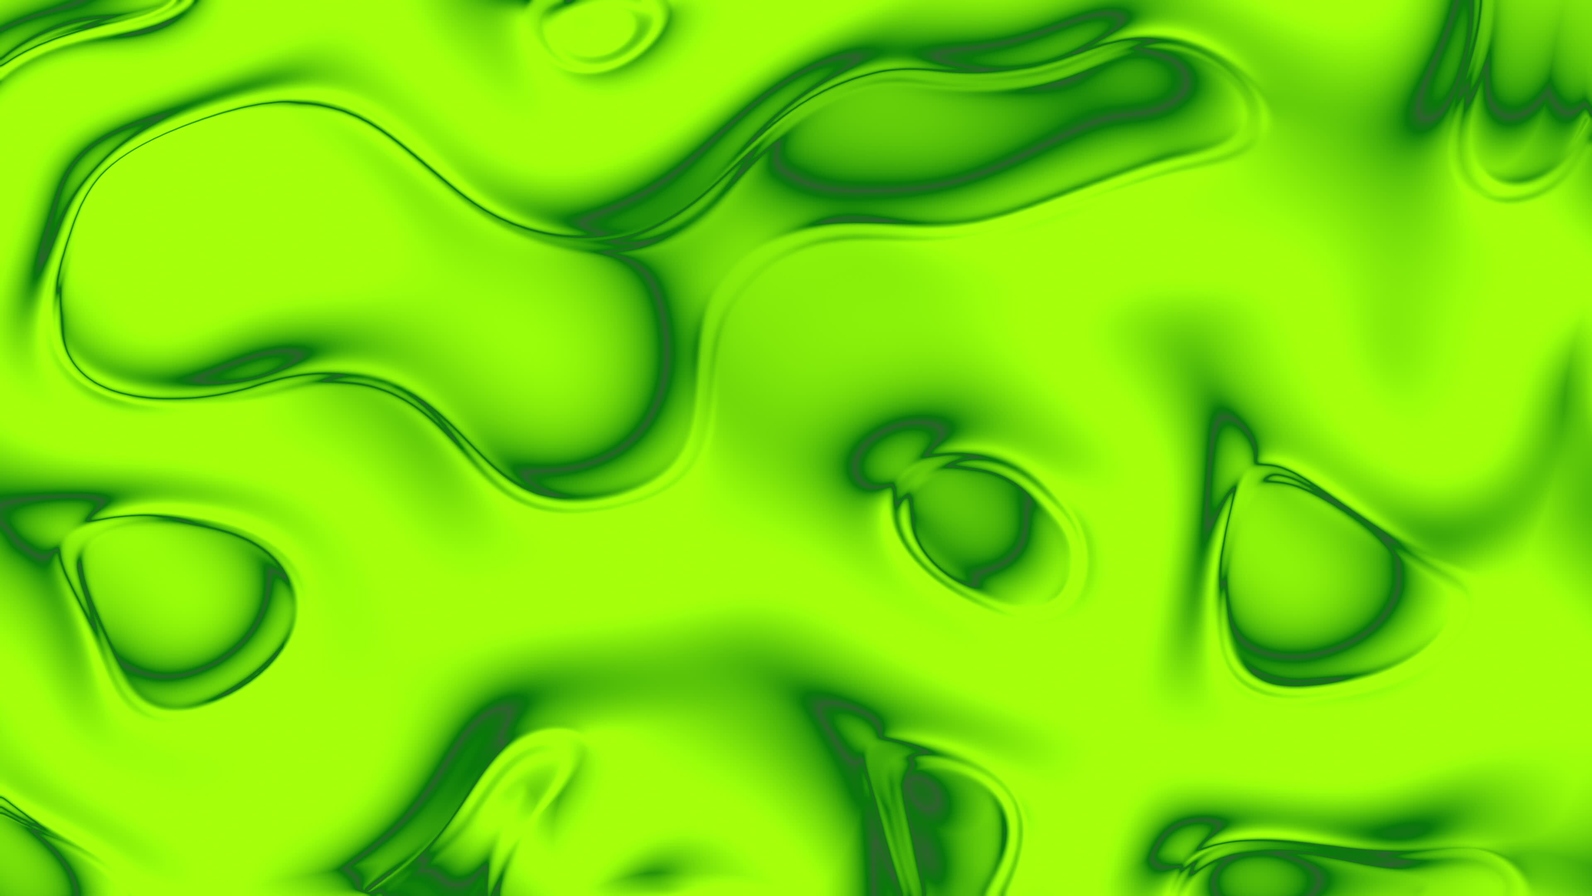 Abstract Liquid Animation 15